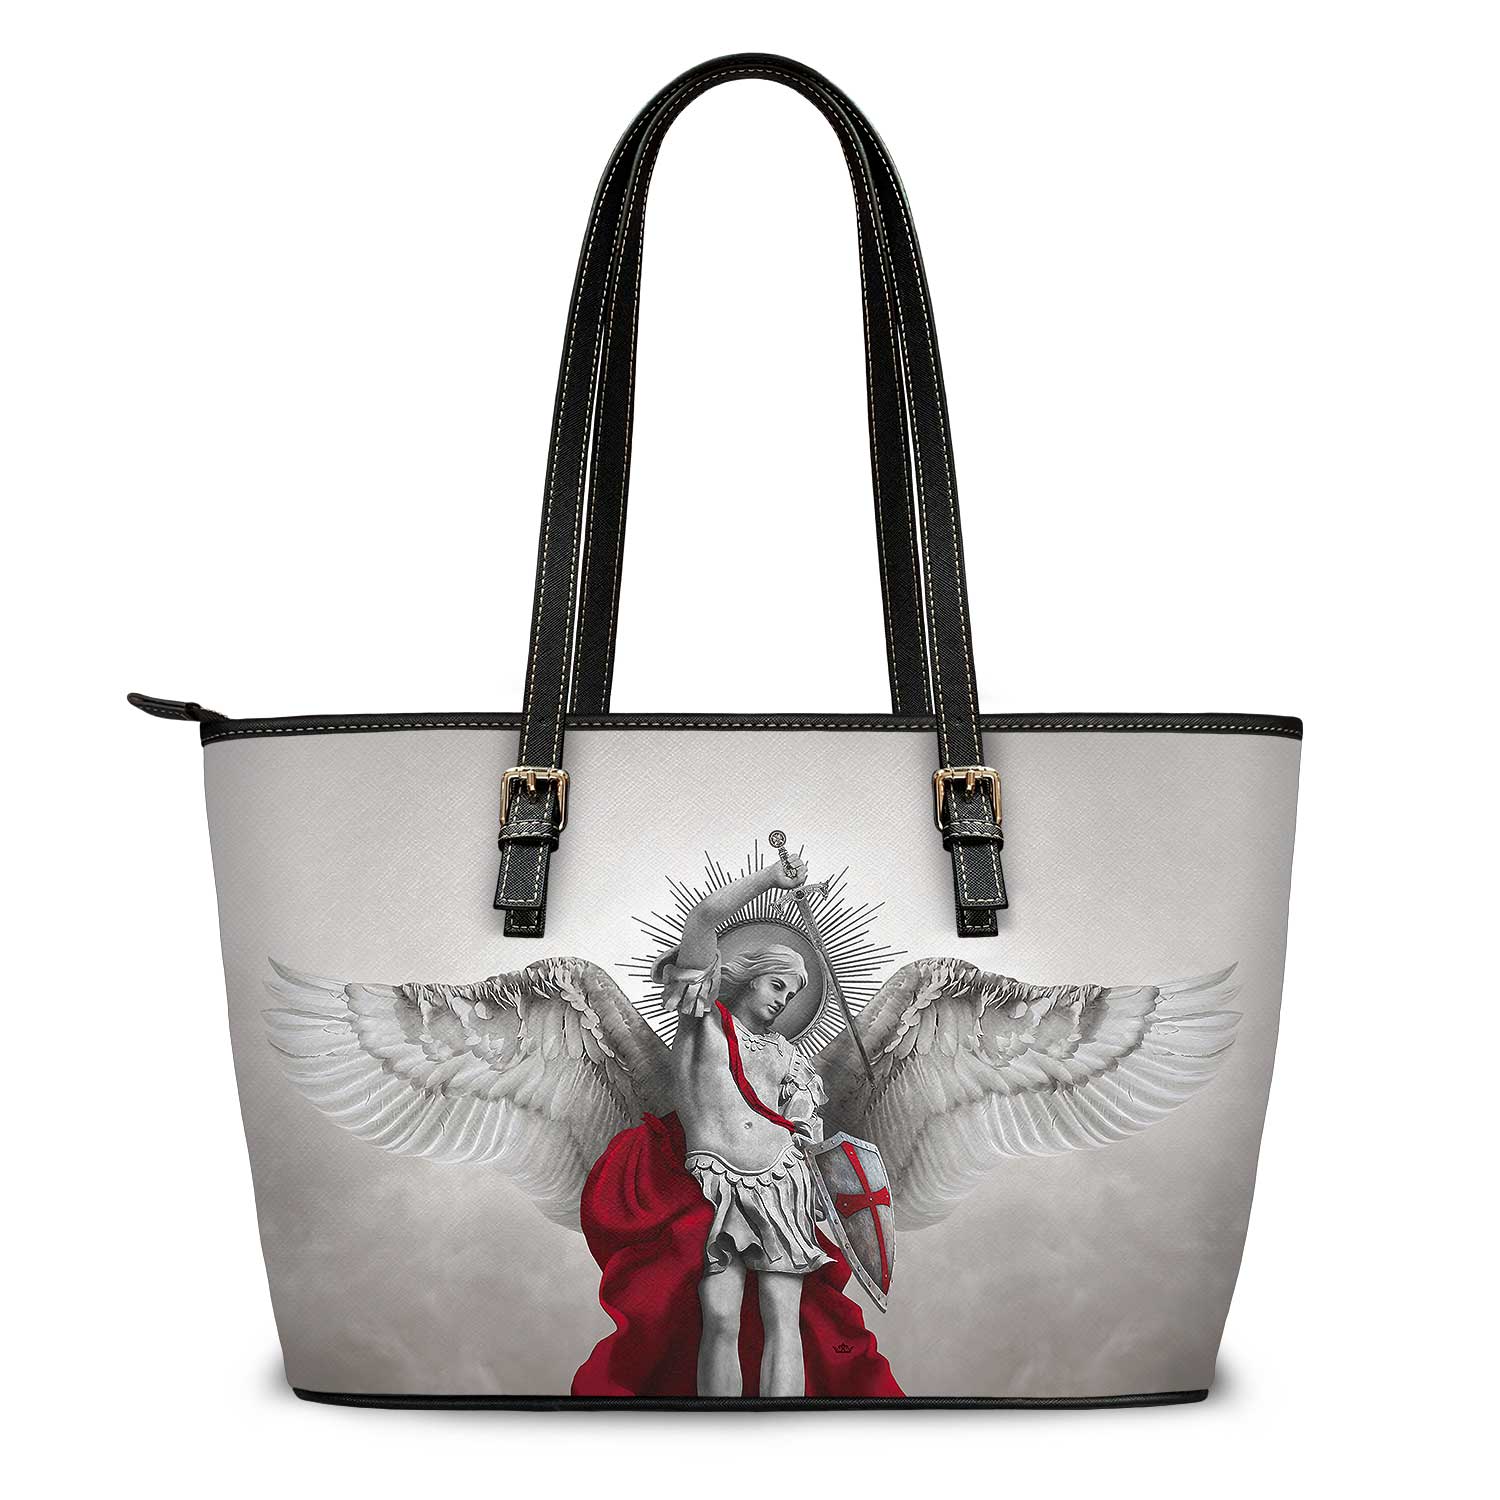 St. Michael the Archangel Tote Bag (Cloud) - VENXARA®